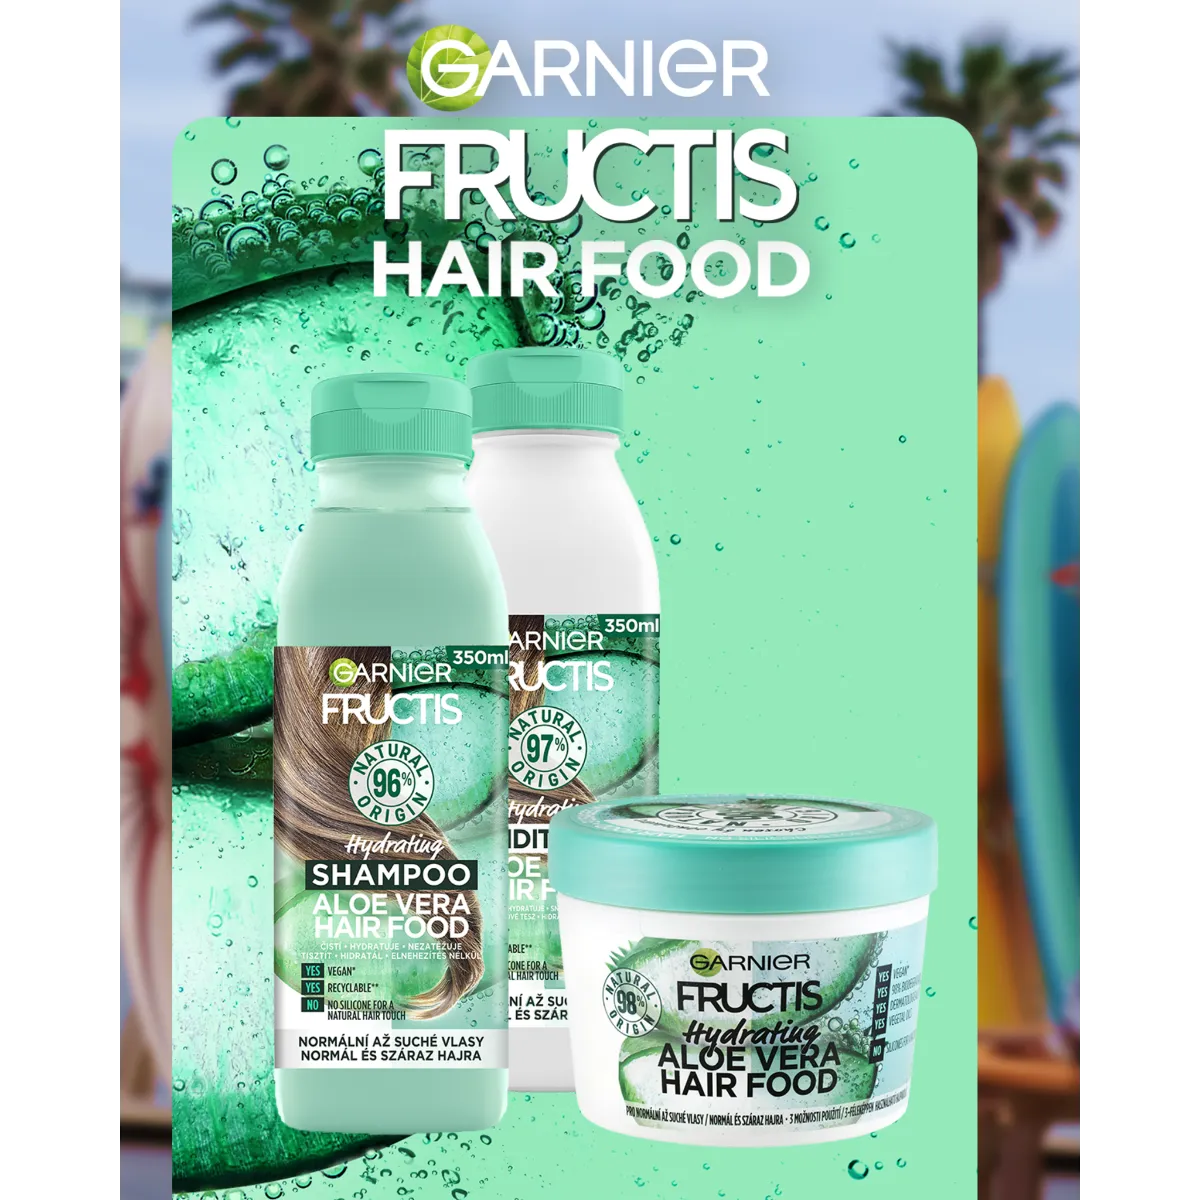 Garnier Fructis Hair Food Aloe Vera balzam 1×350 ml